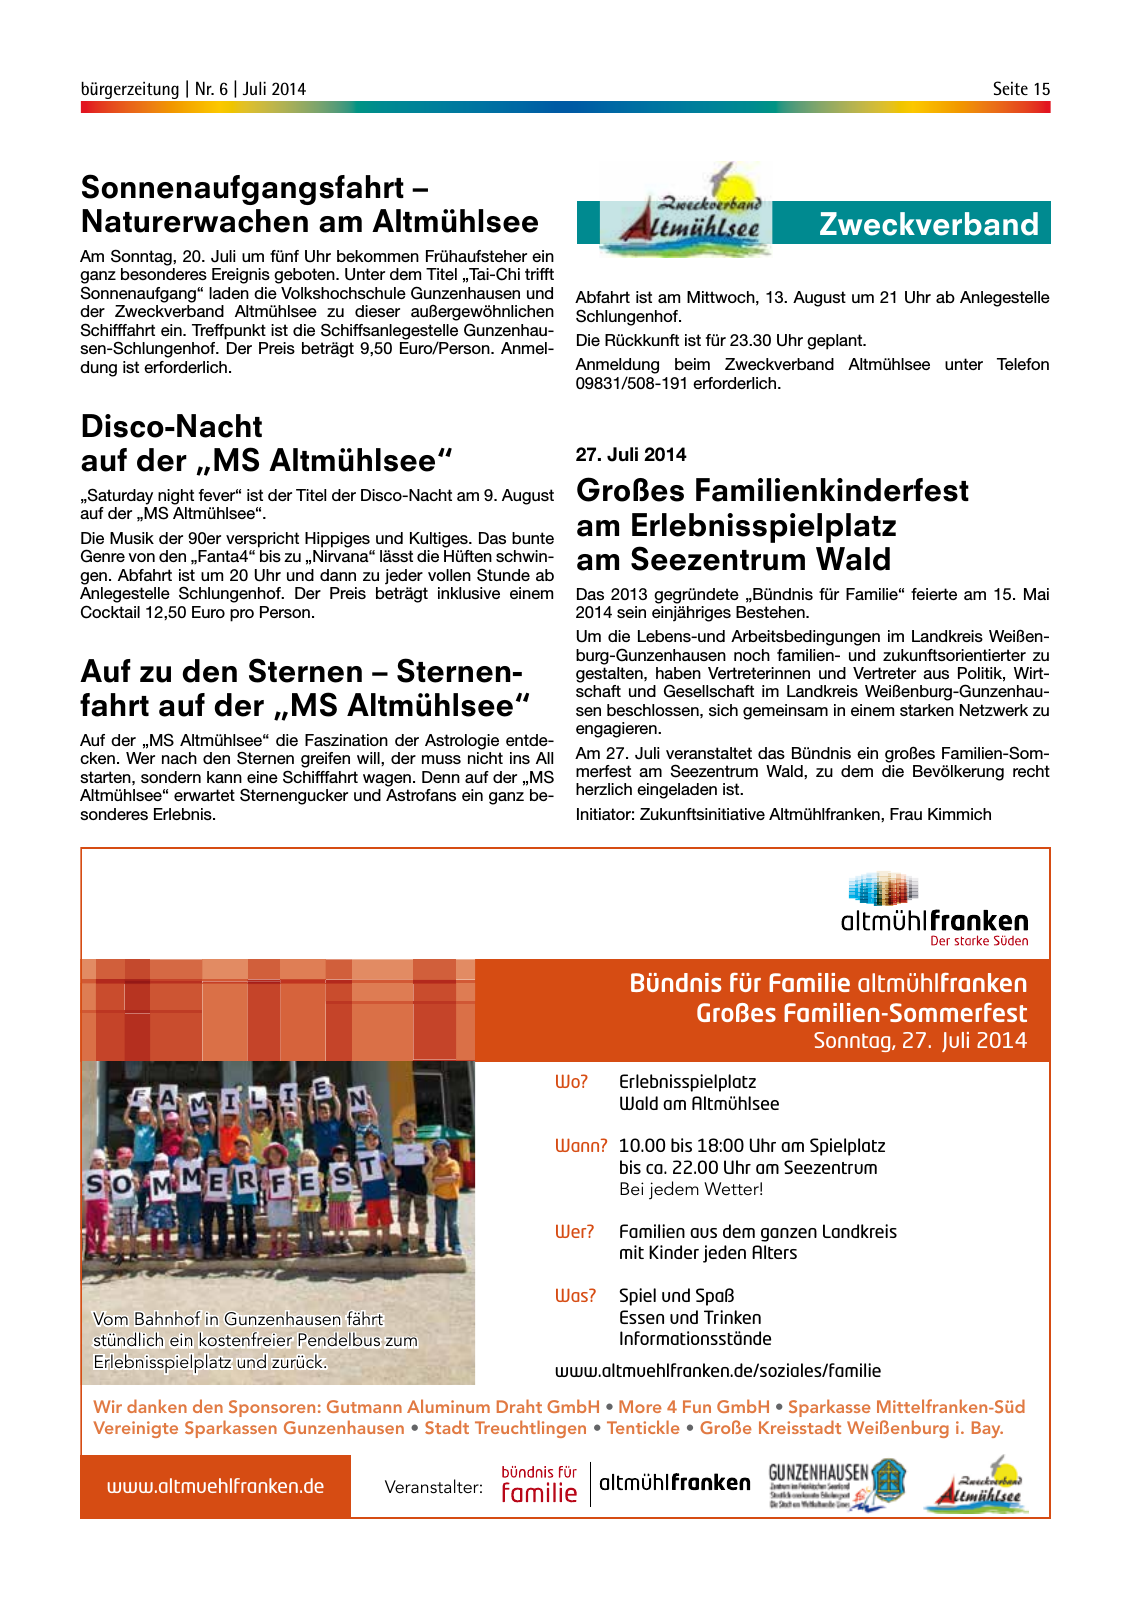 Vorschau StadtLandGUN Gunzenhäuser Bürgerzeitung Nr. 6 | Juli 2014 Seite 15